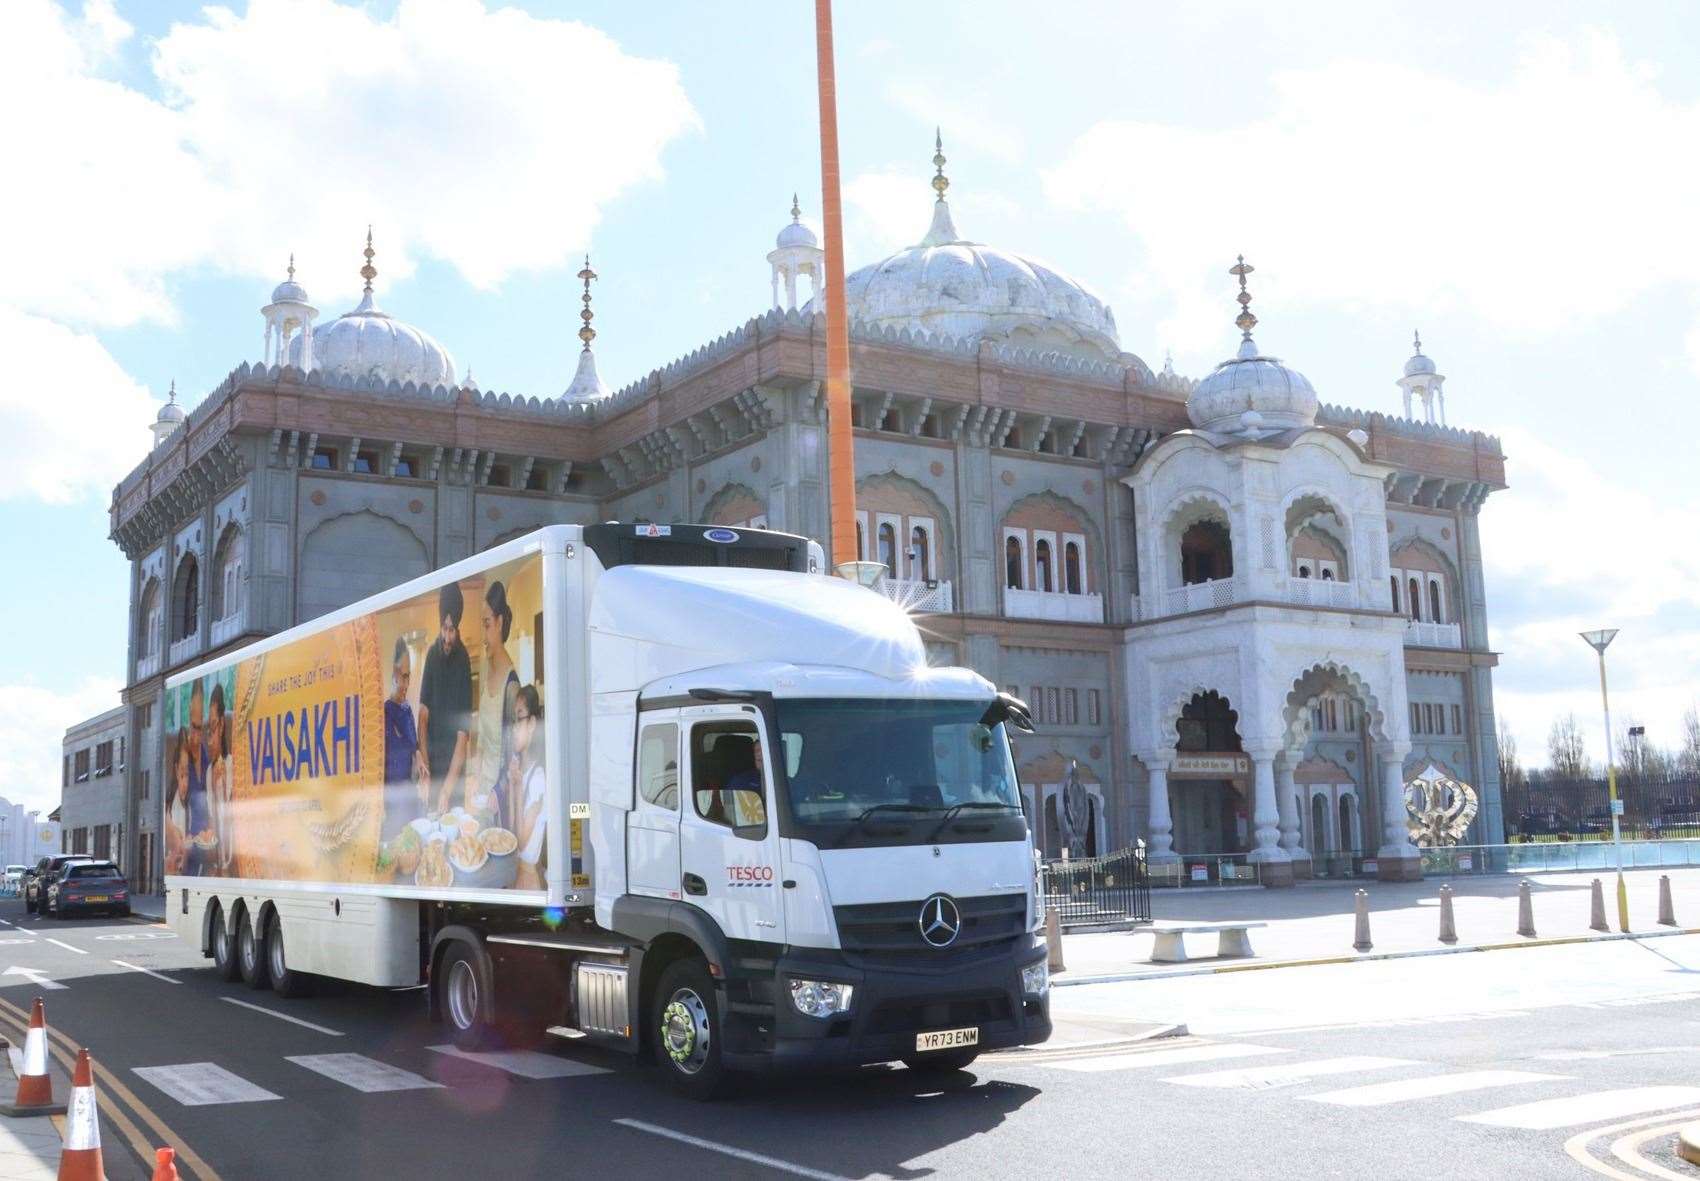 The Tesco van at the Guru Nanak Darbar Gurdwara in Gravesend